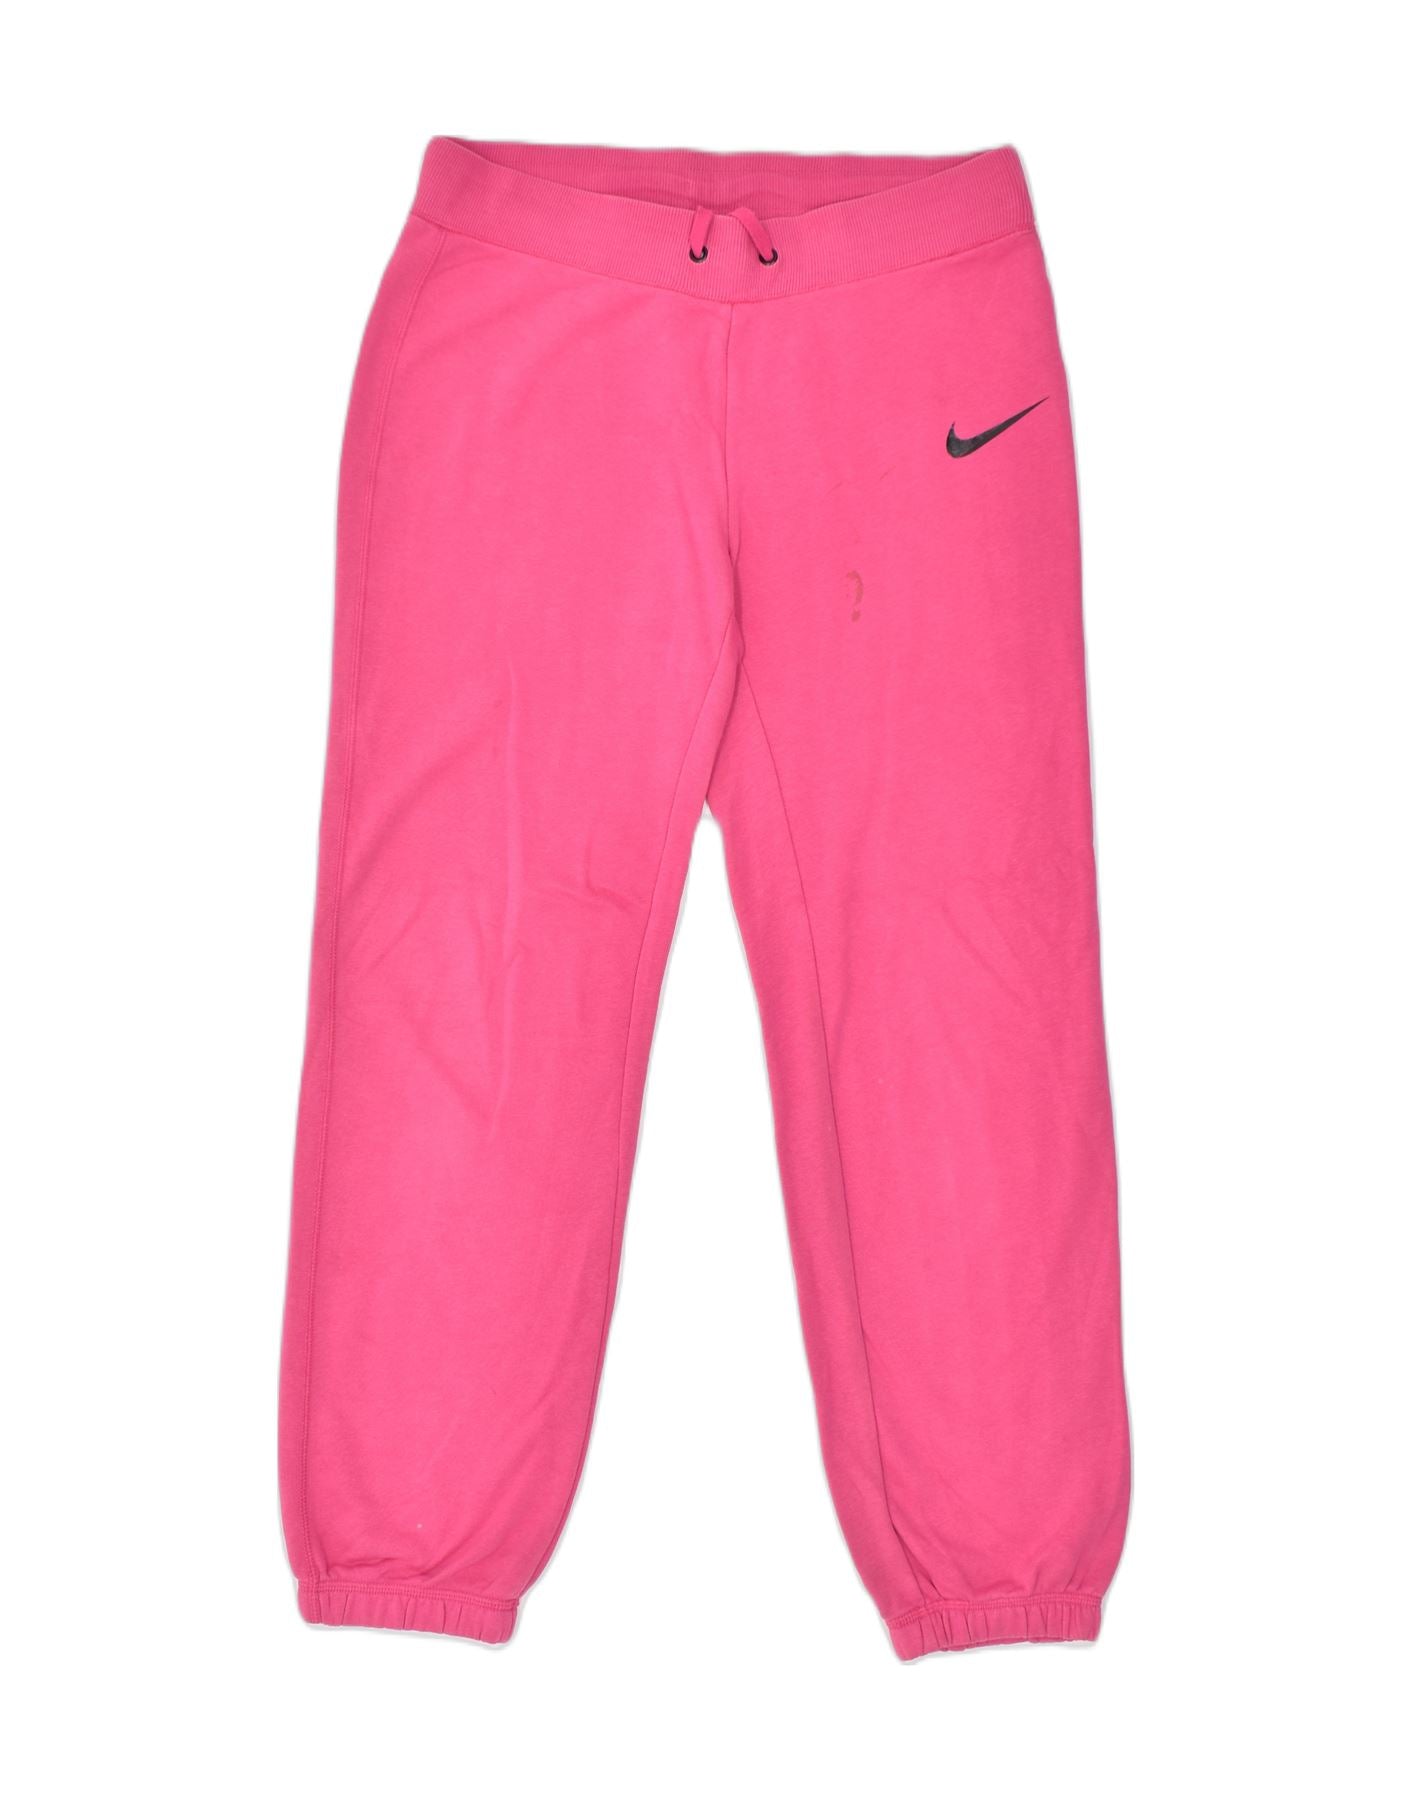 NIKE Womens Tracksuit Trousers Medium Pink Cotton Sports